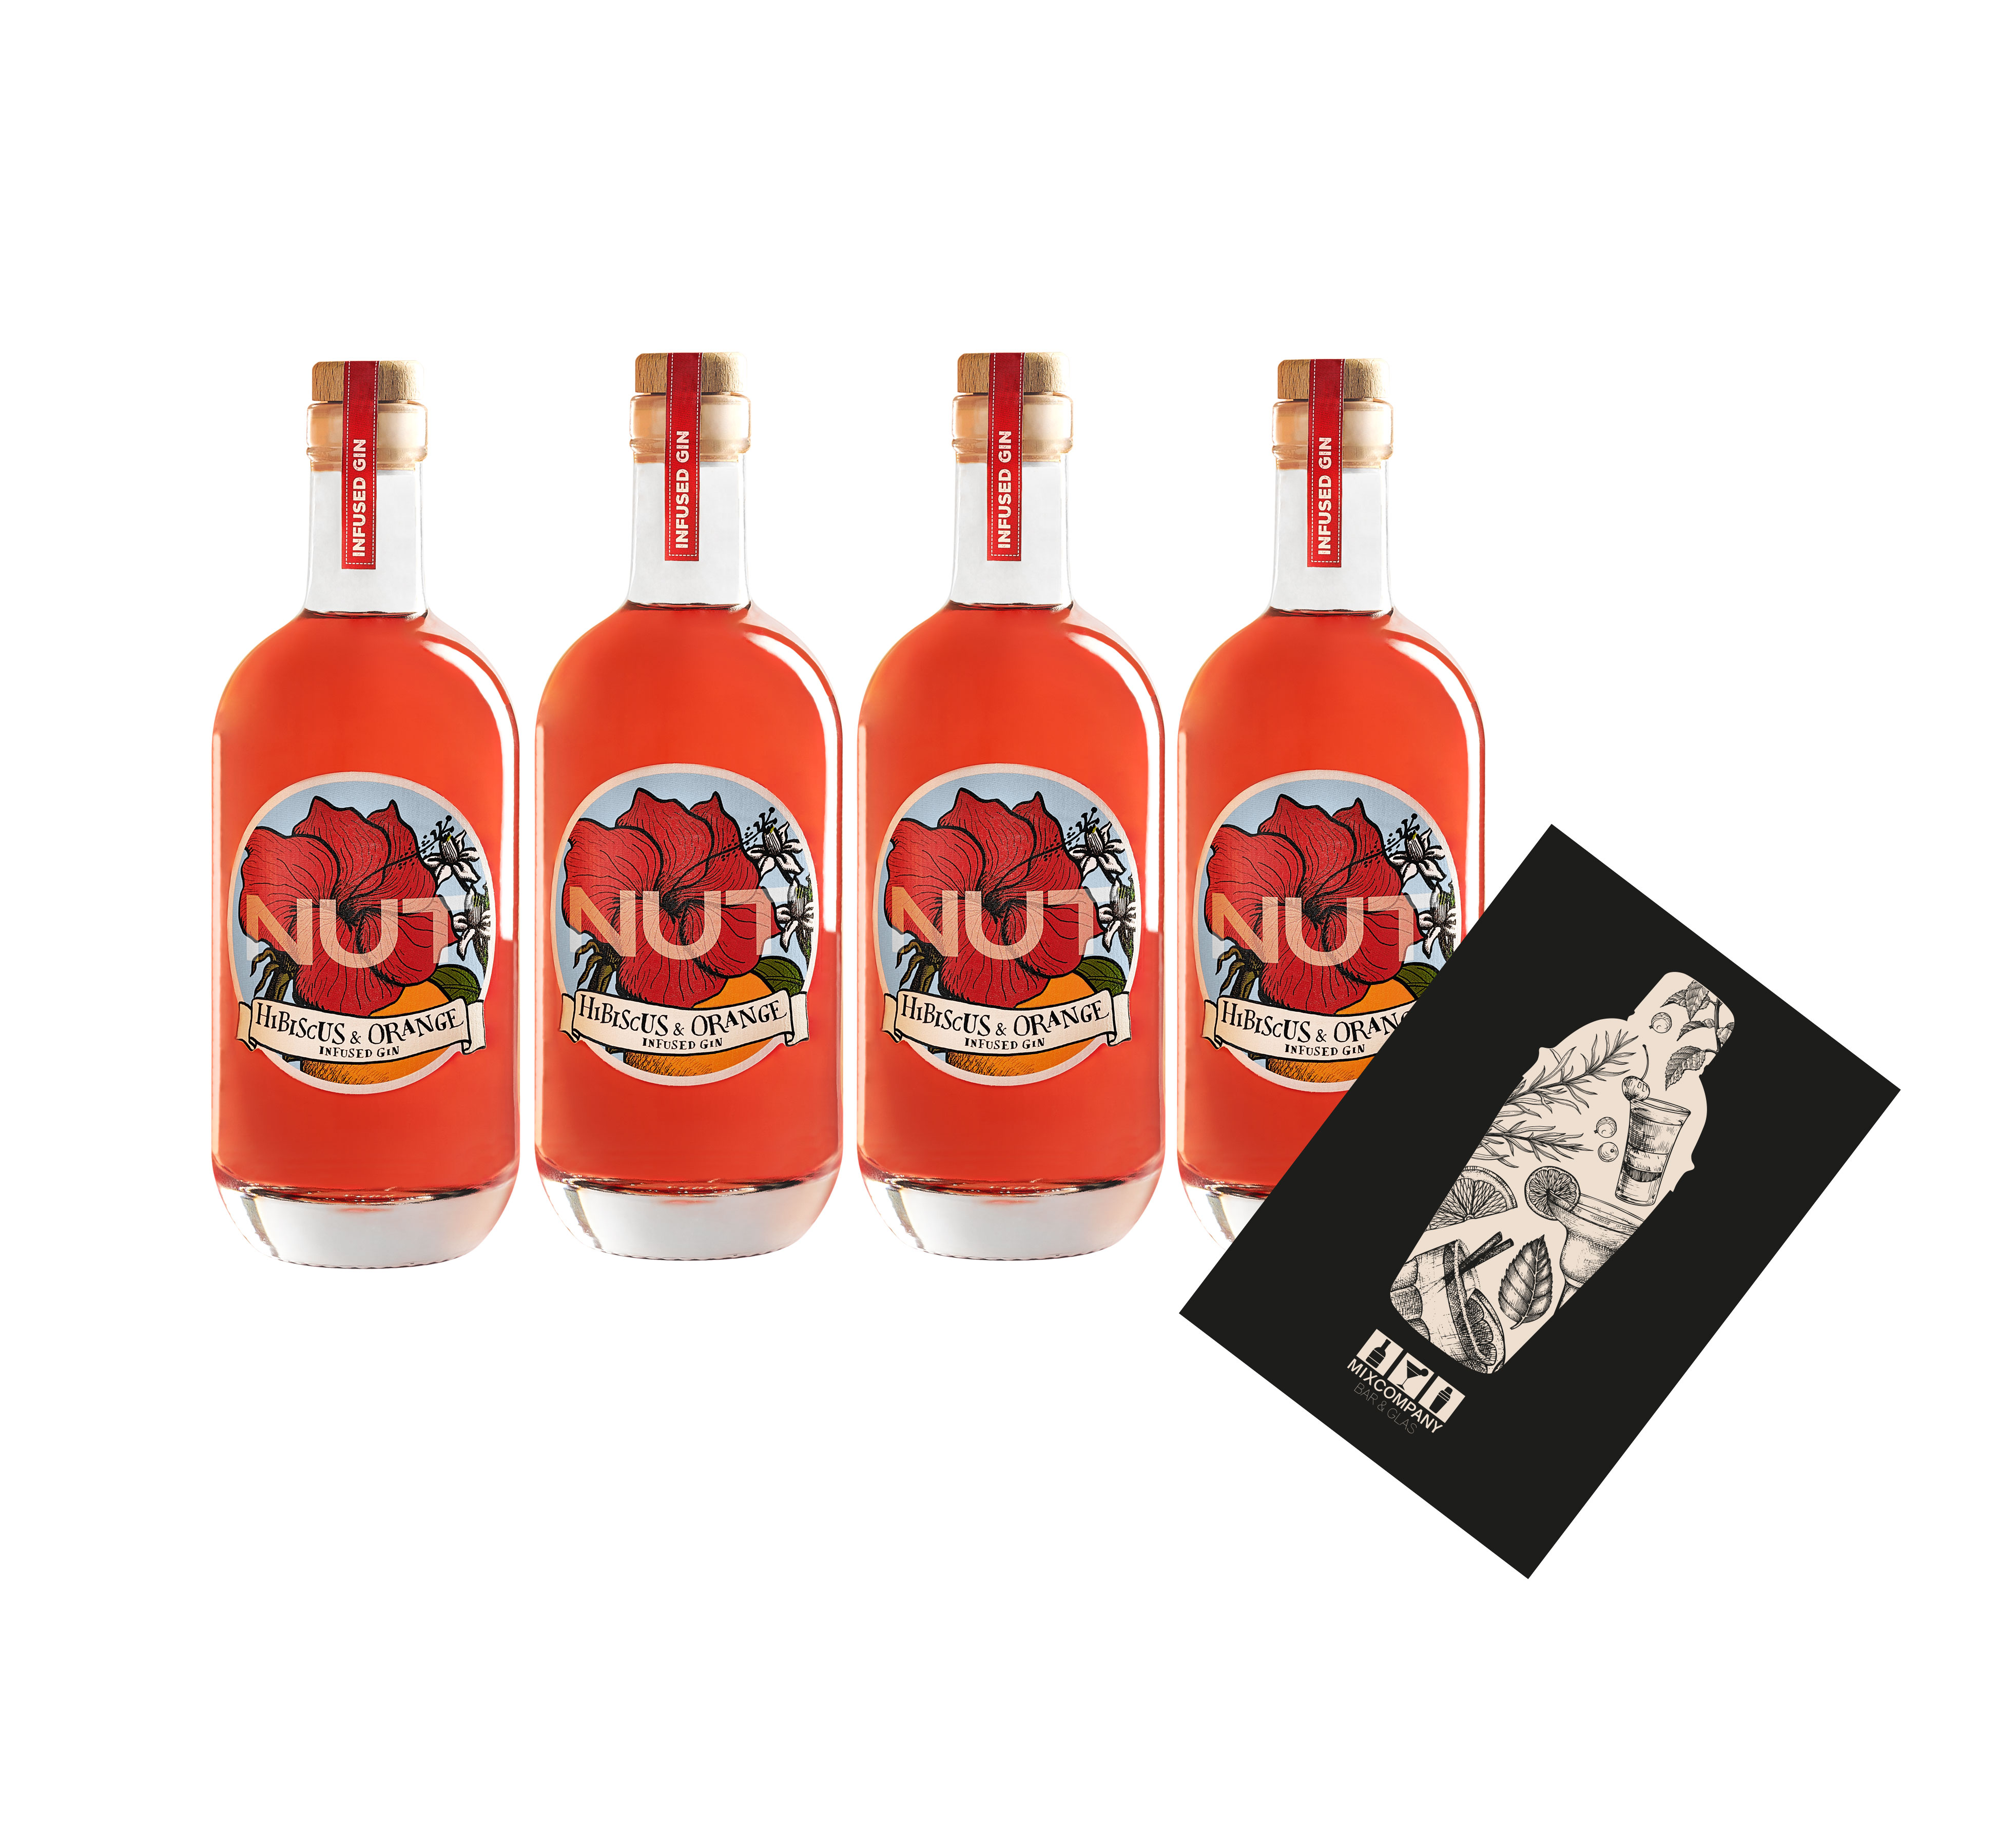 NUT 4er Set Infused Gin Hibiscus Orange 4x 0,7L (40% Vol) Hibiskus Orange Gin NUT Distillery- [Enthält Sulfite]